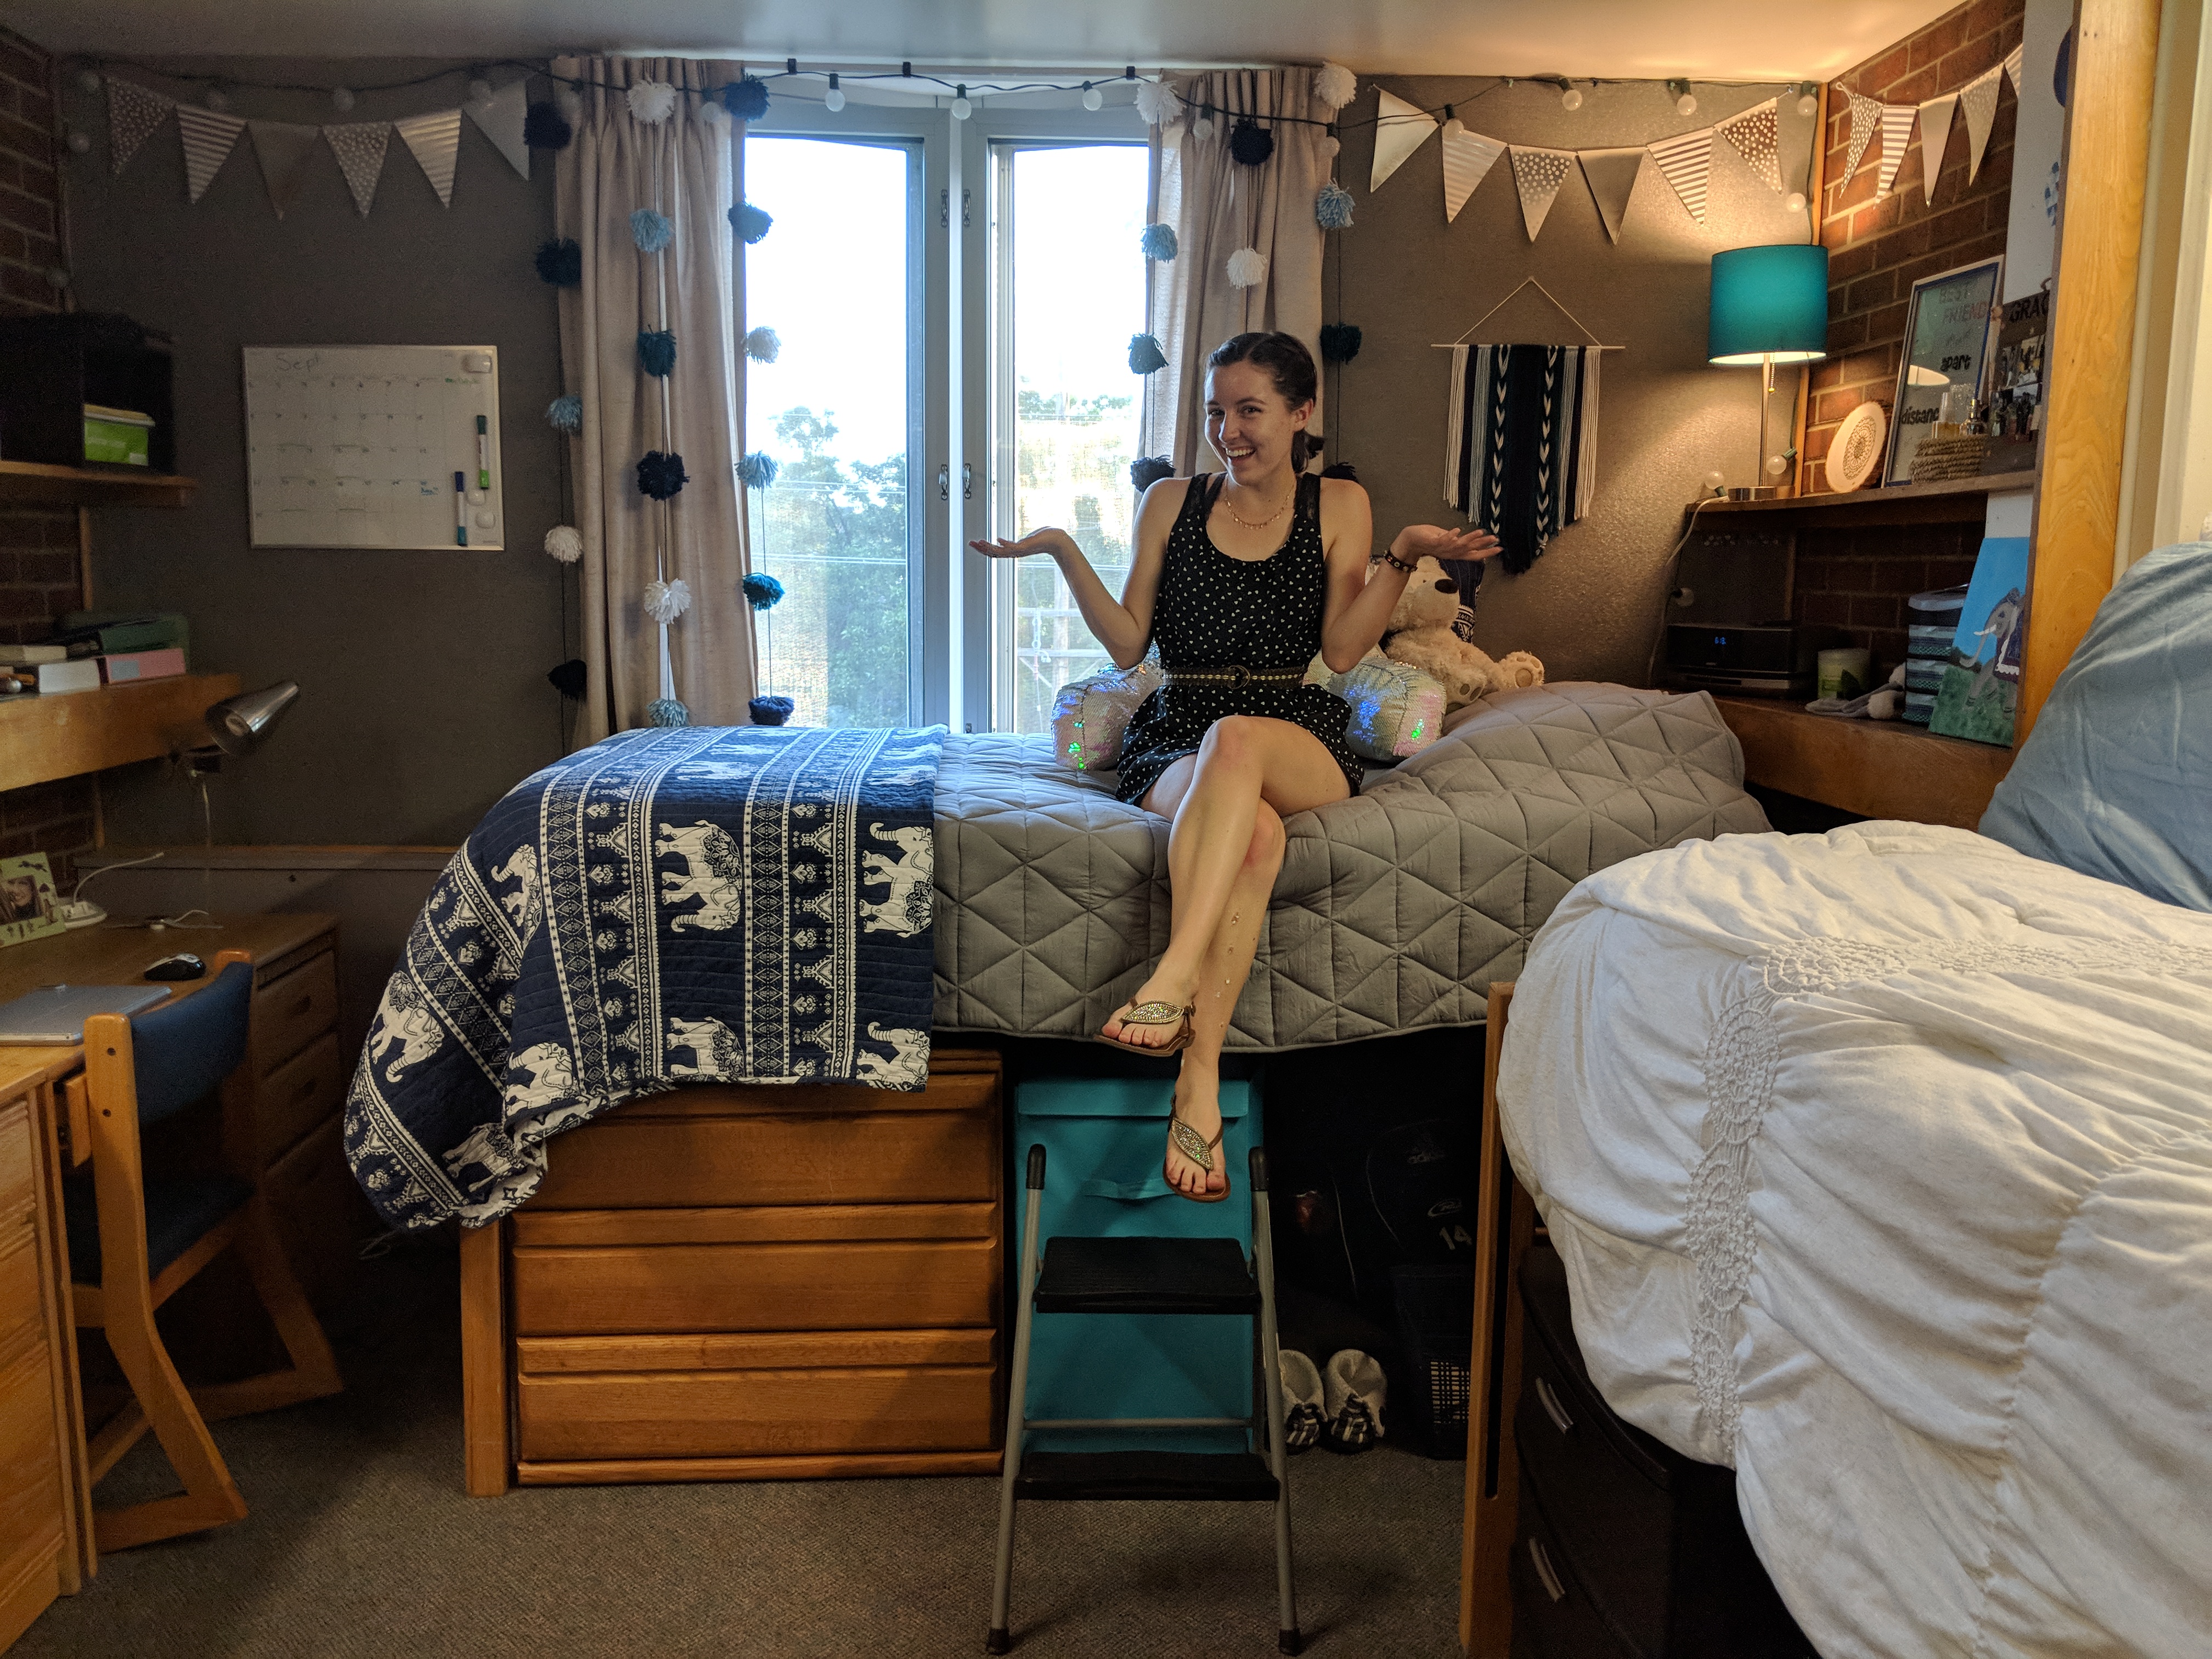 dorm room tour, teal and grey dorm room